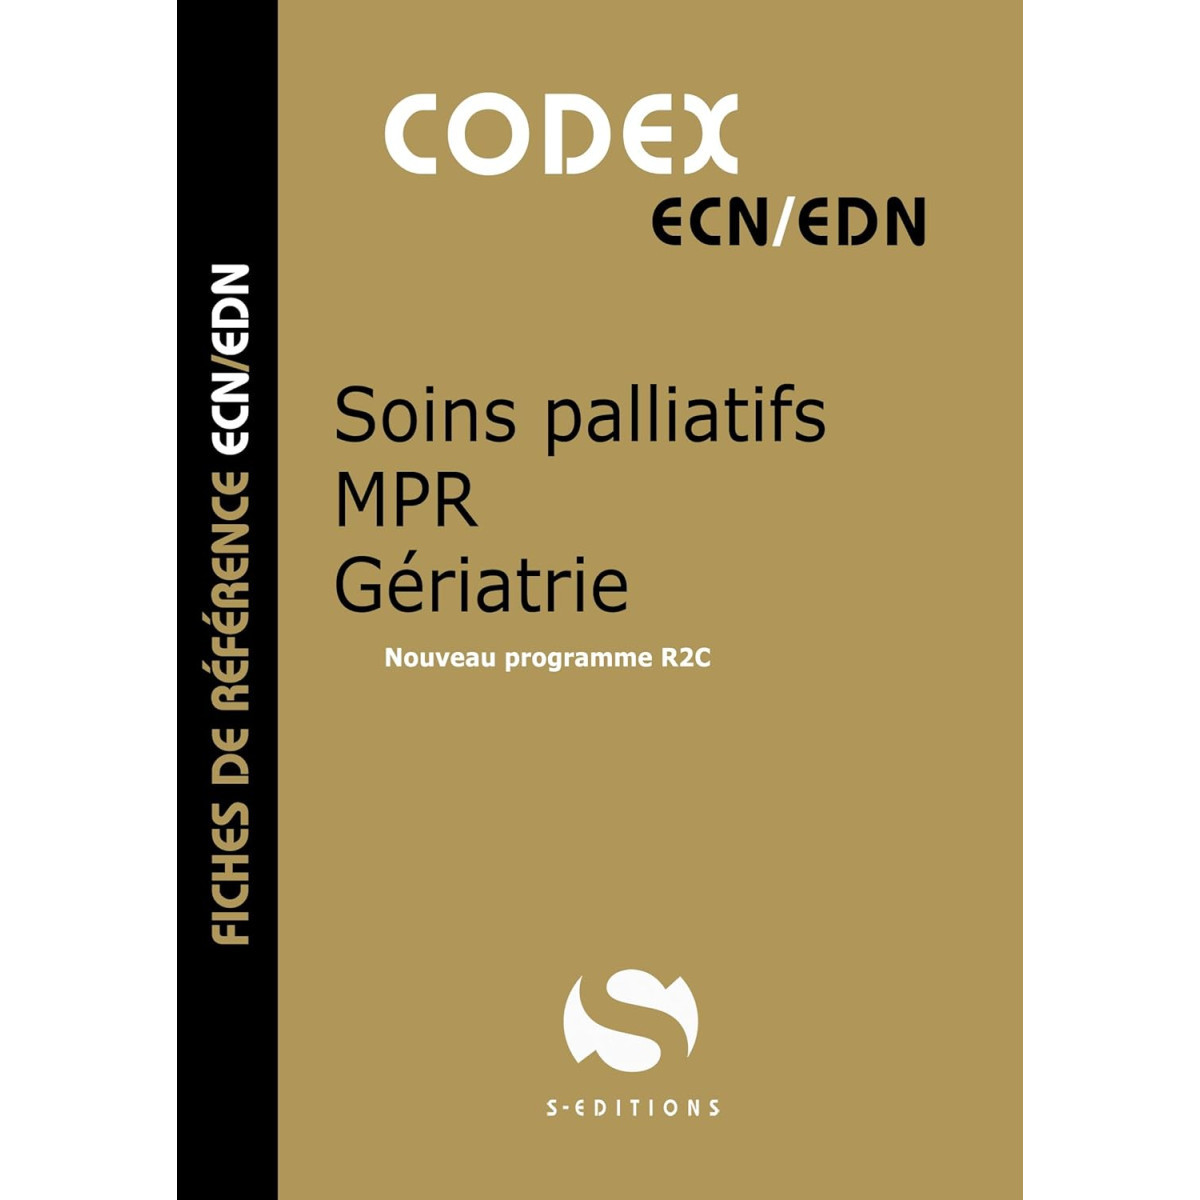 Codex Soins palliatifs - MPR - Gériatrie